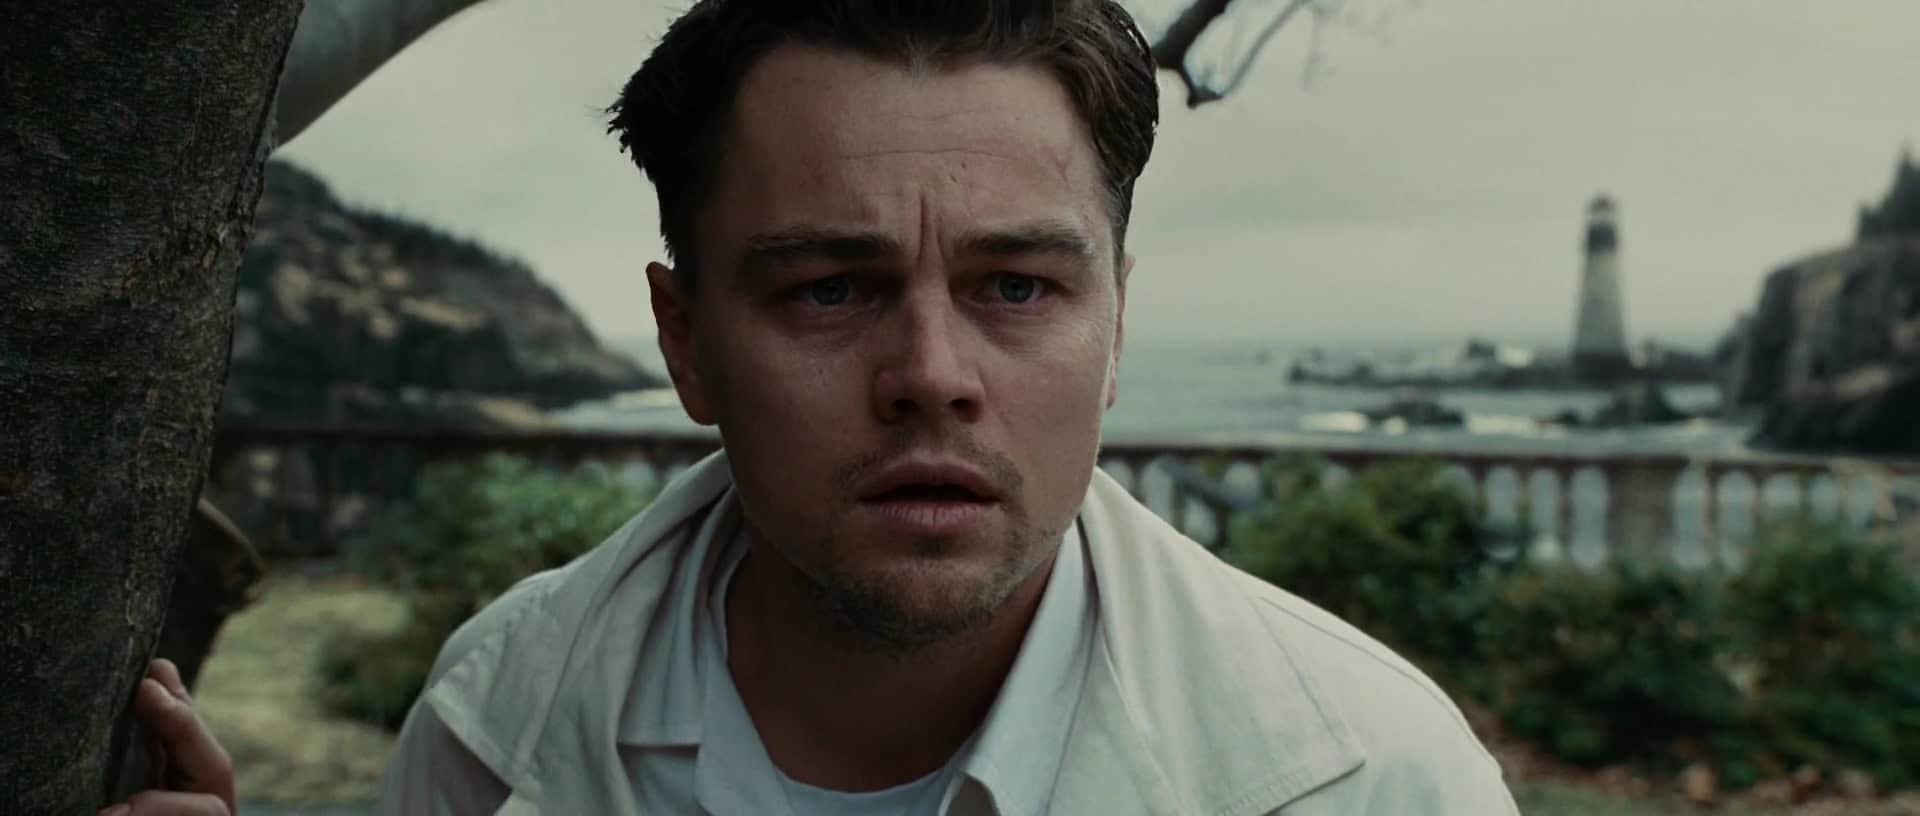 Leonardo DiCaprio in Shutter Island (2010)